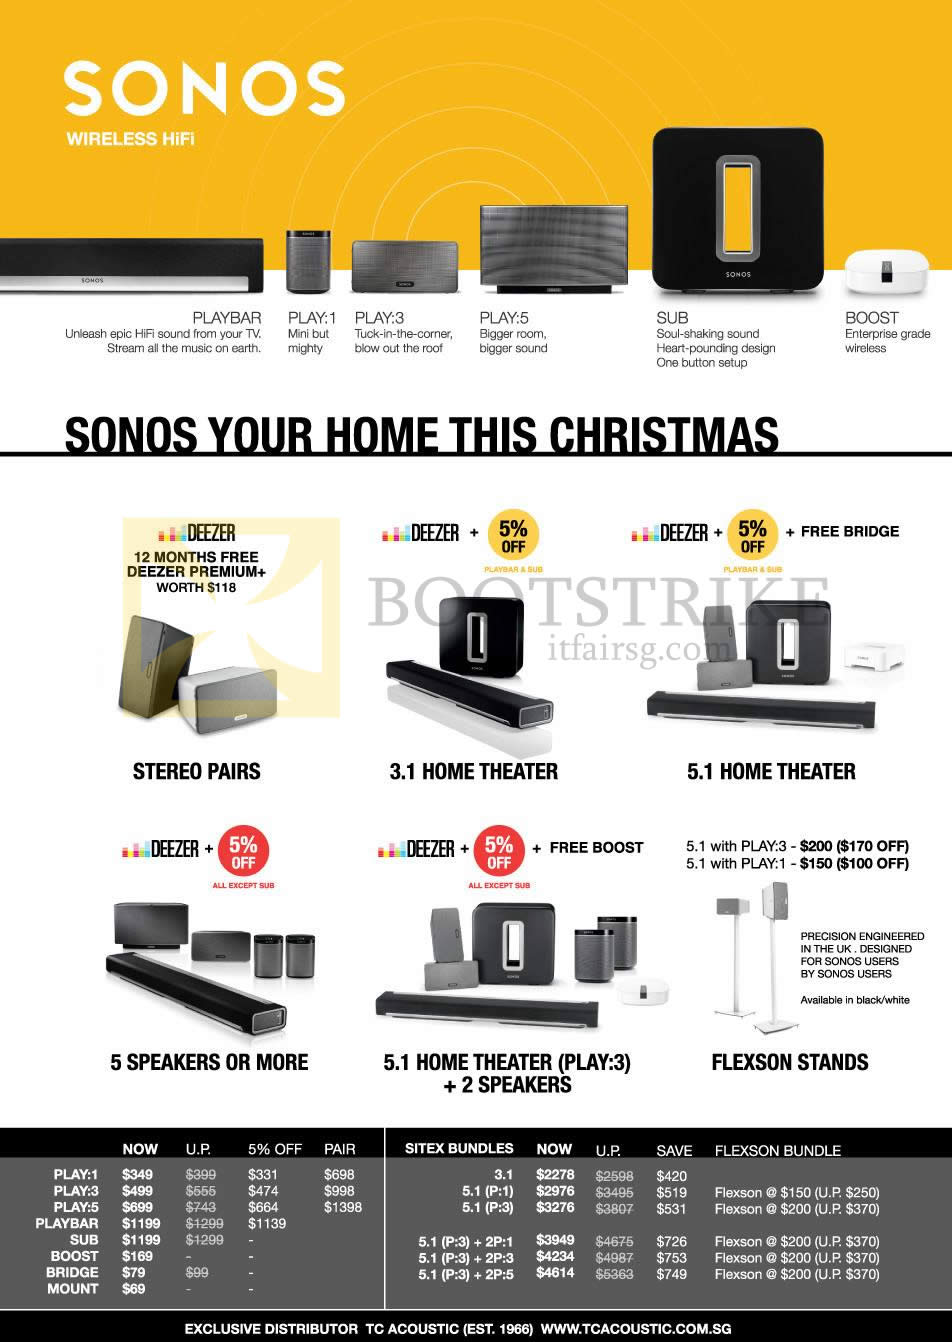 SITEX 2014 price list image brochure of Sonos Speakers Wireless Hifi, Play 1, Play 3, Play 5, Play Bar, Sub, Boost, Bridge, Mount